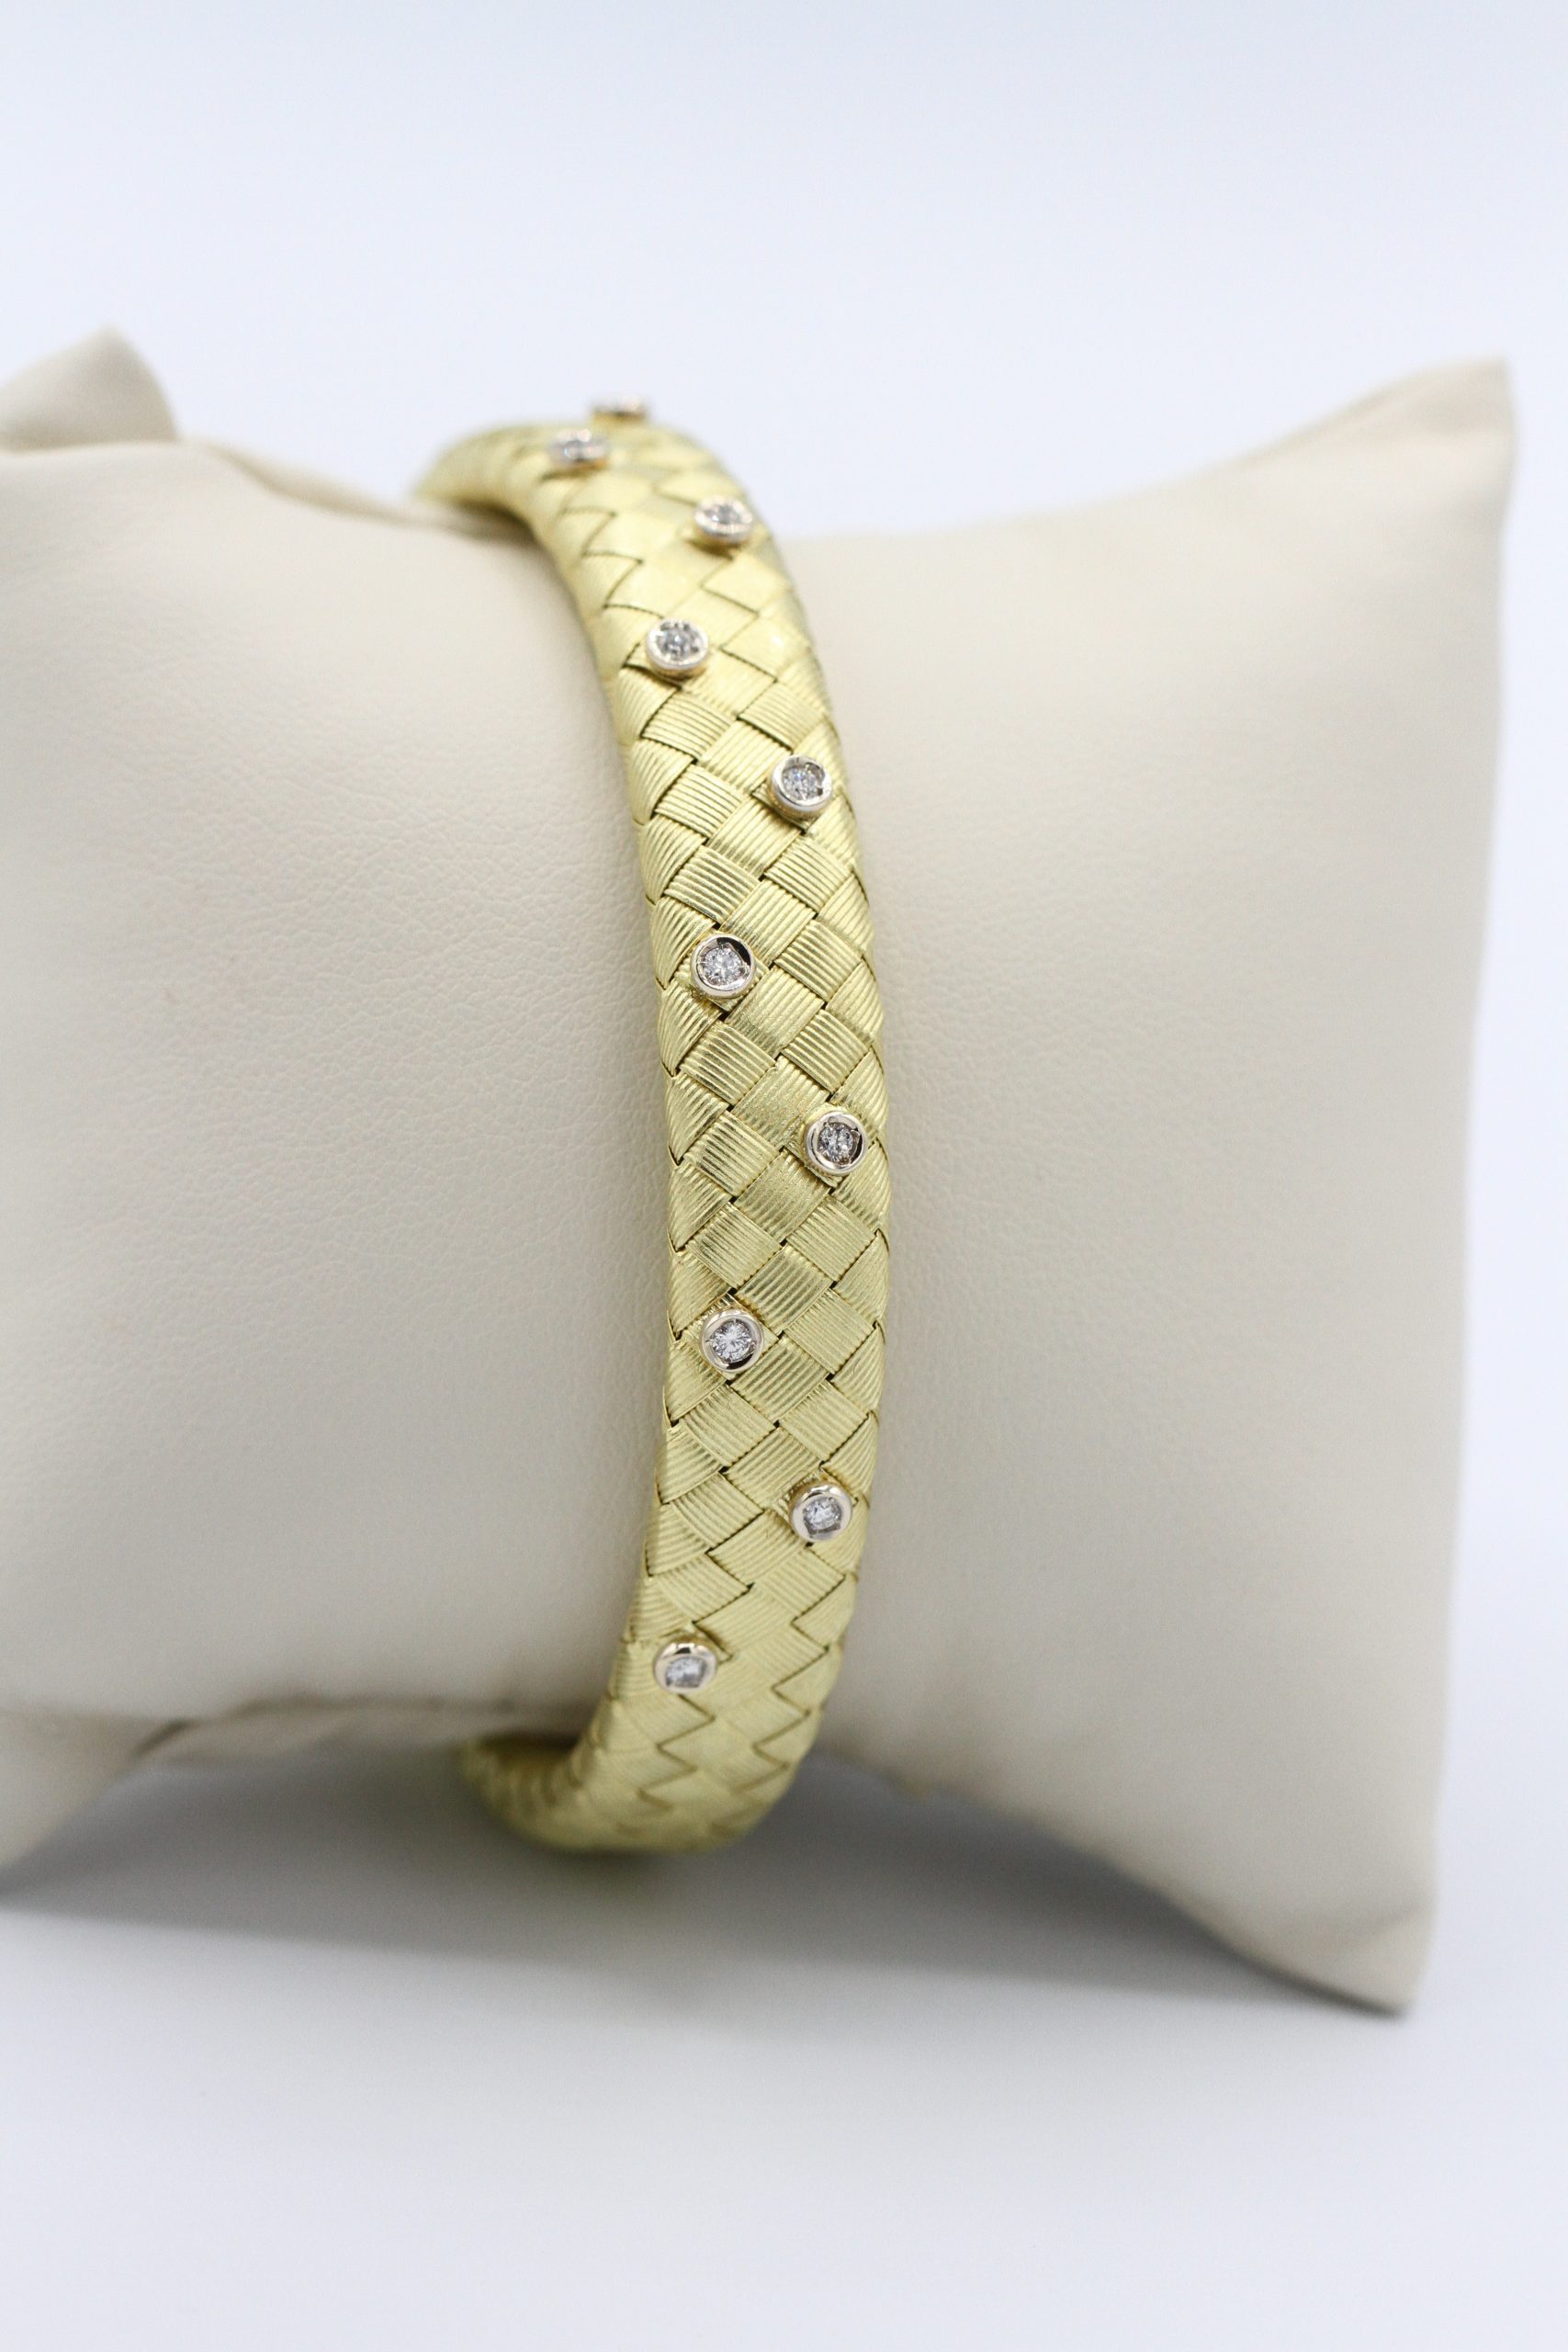 A gold bracelet with inlaid diamonds